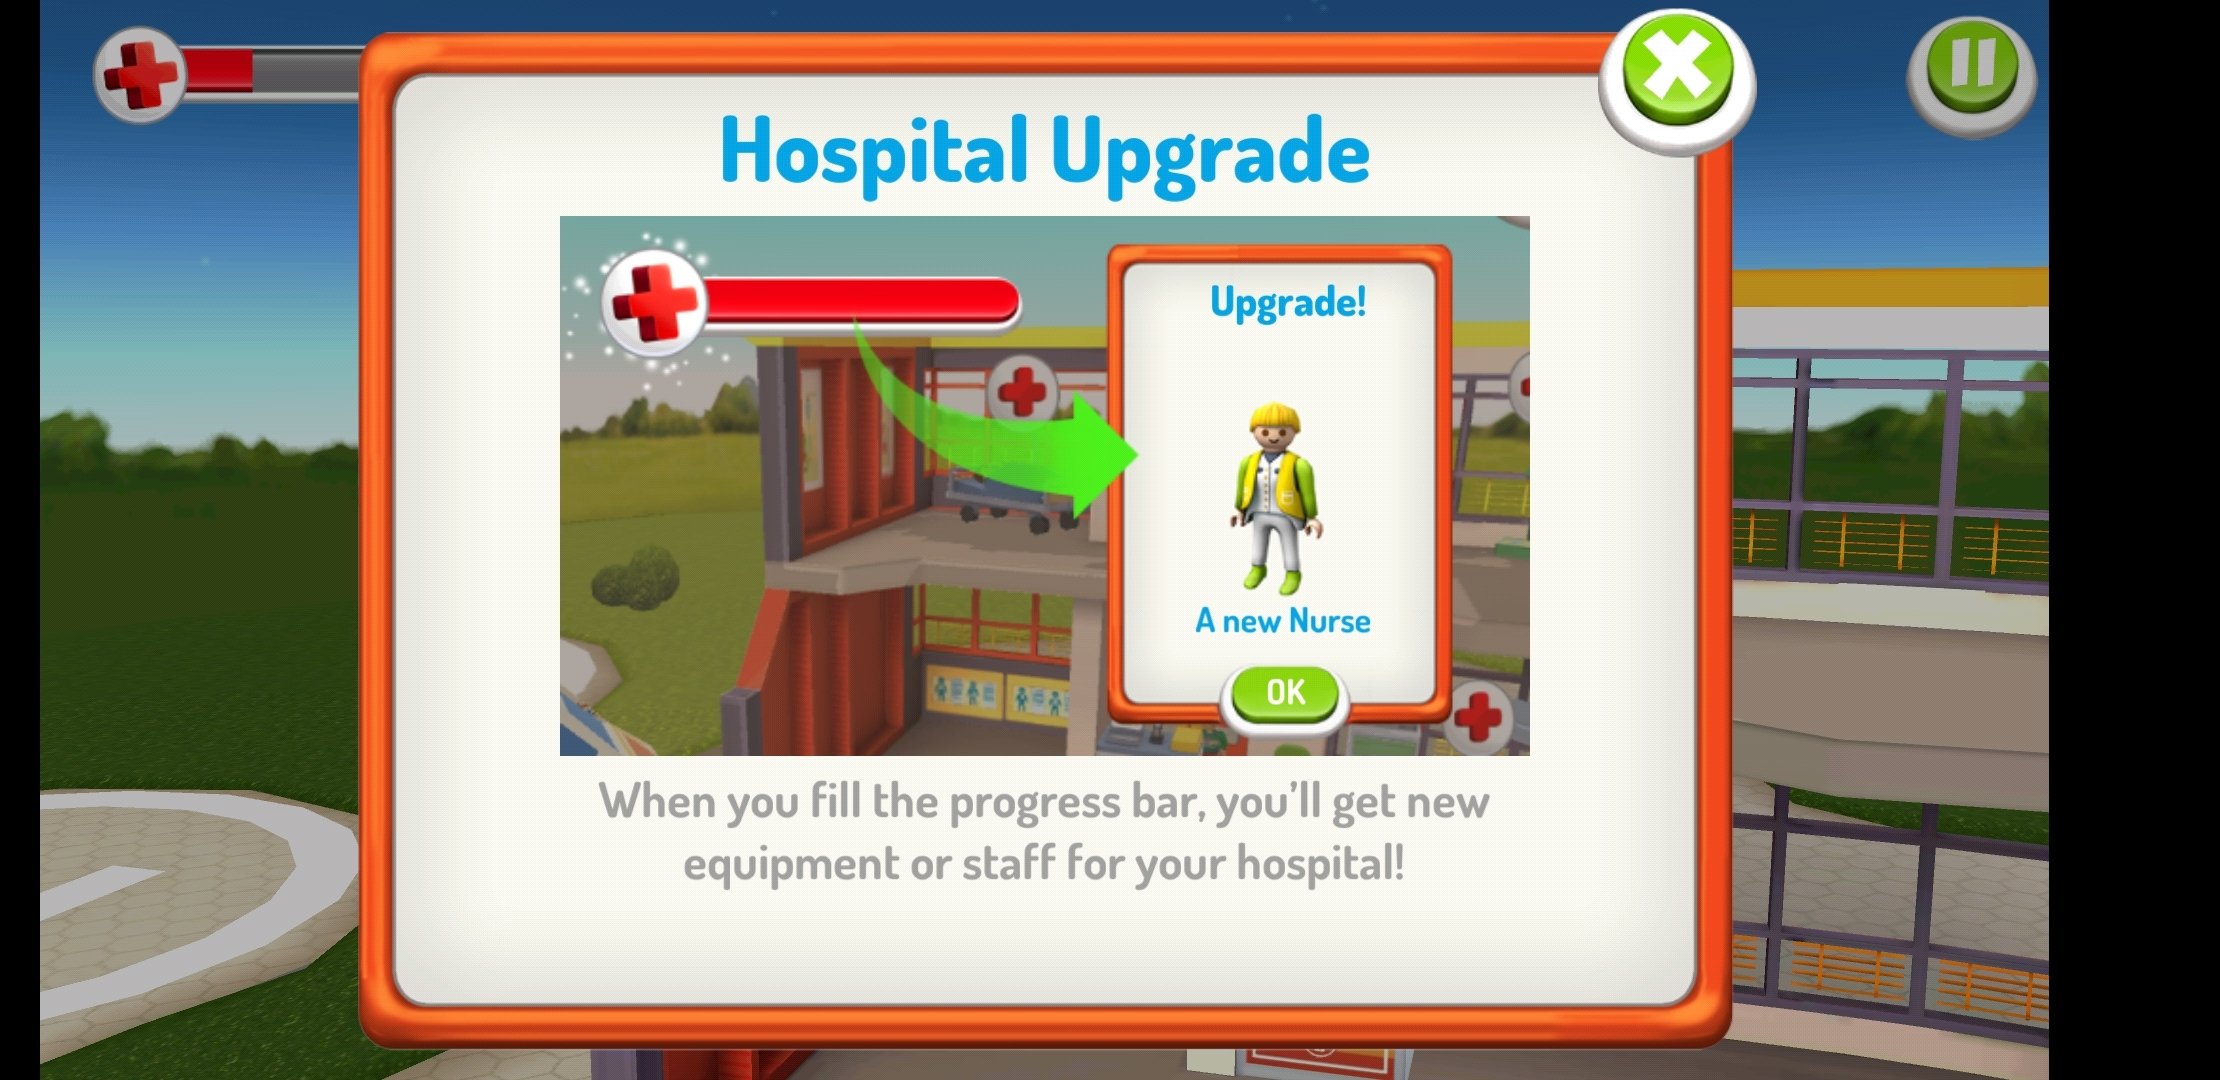 PLAYMOBIL Hôpital des enfants – Applications sur Google Play